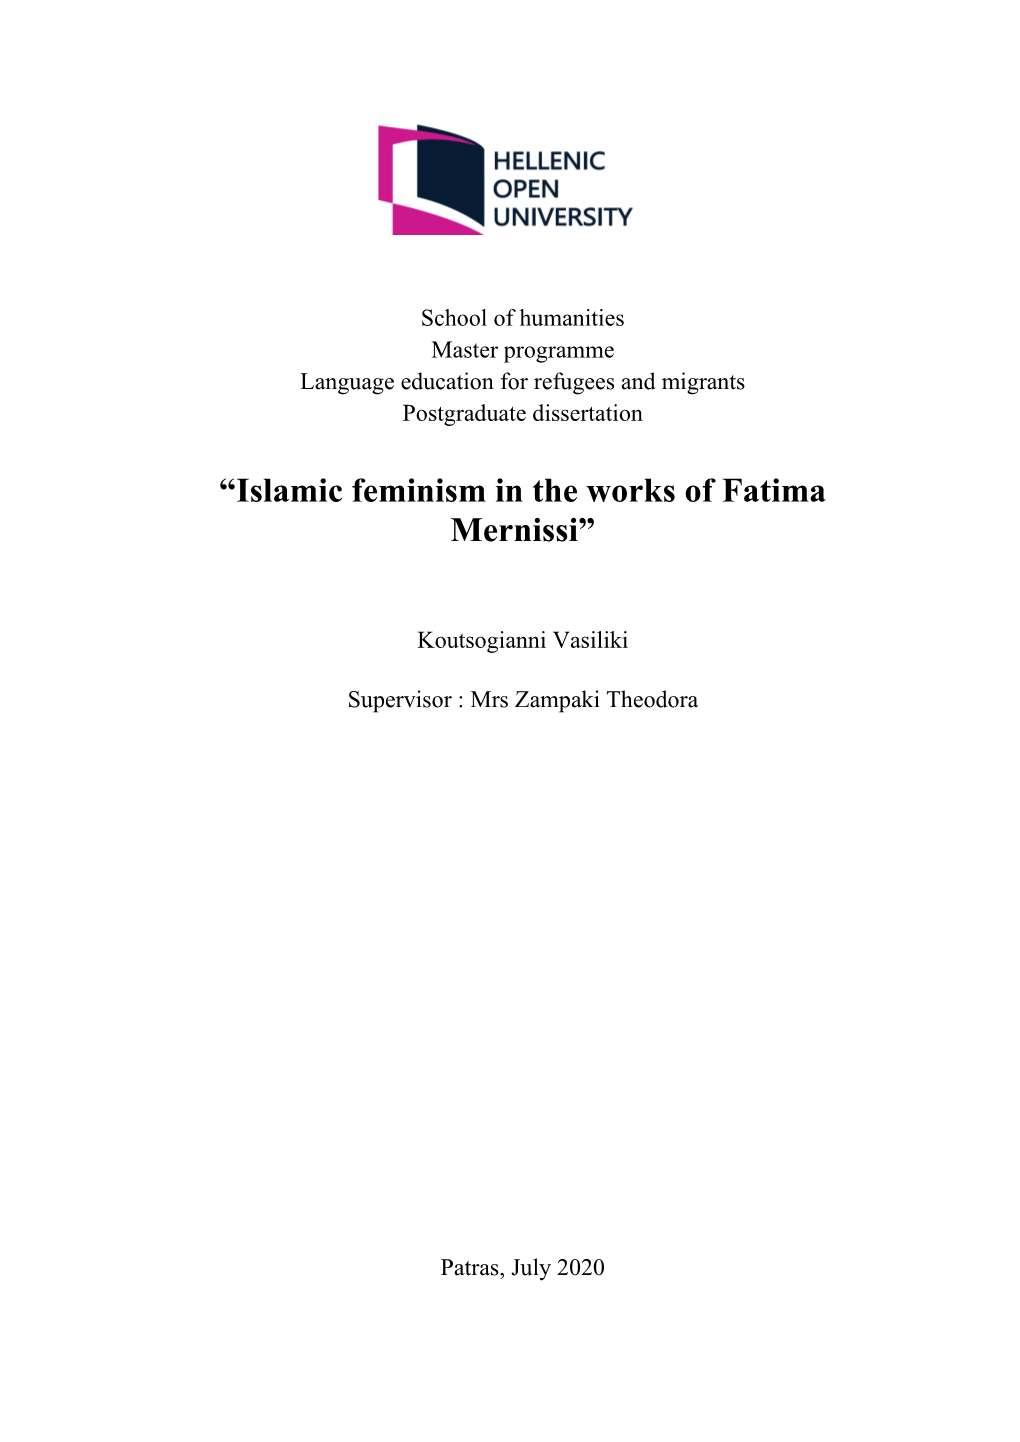 “Islamic Feminism in the Works of Fatima Mernissi”